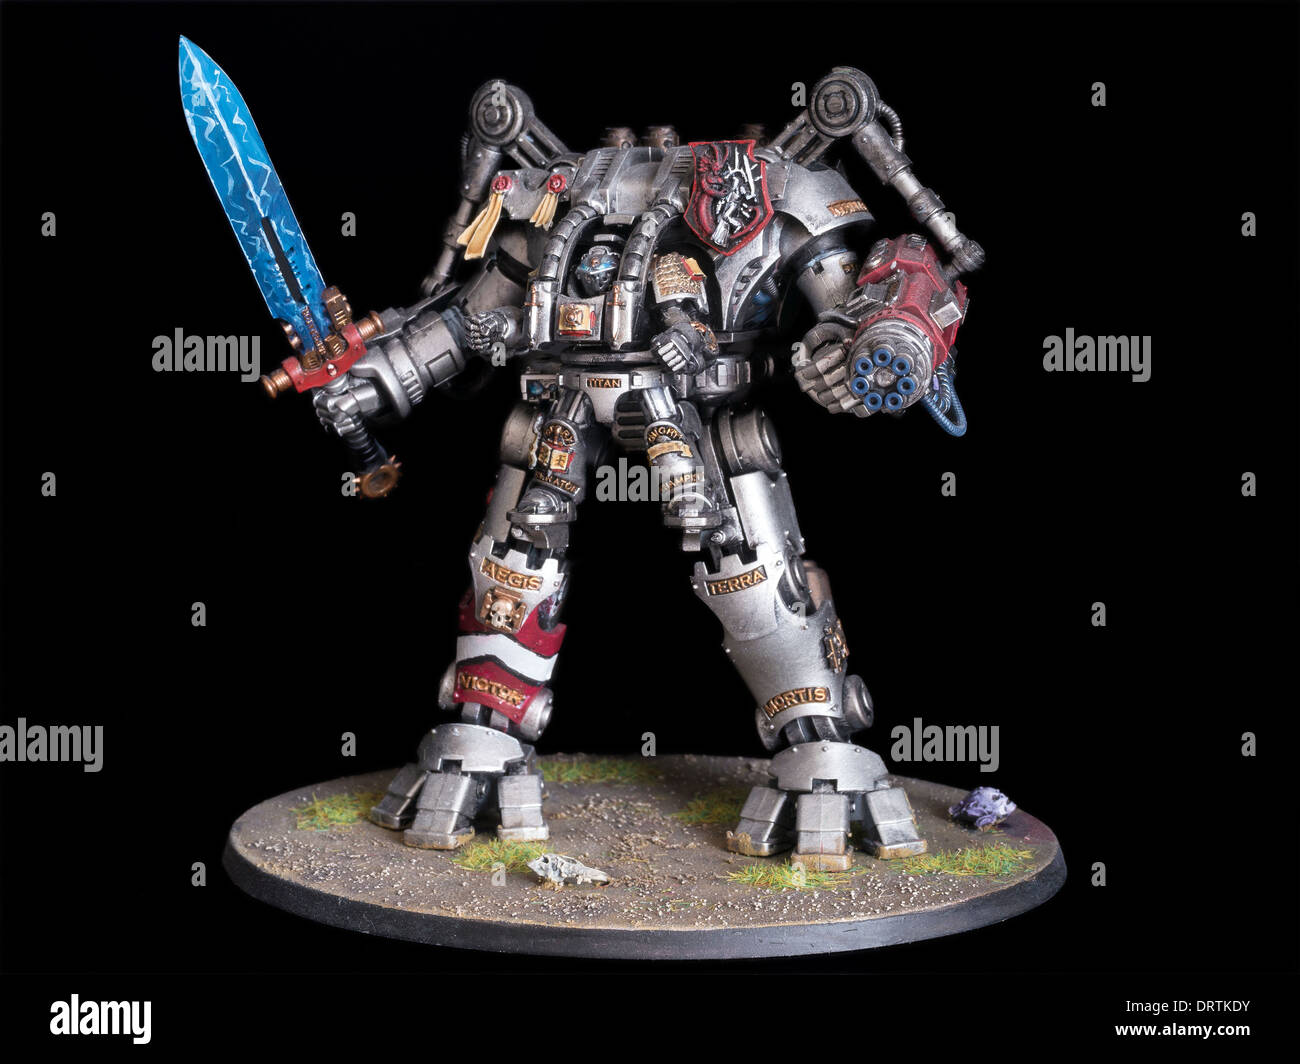 Nemesis Dreadknight Grey Knight Games Workshop hand-painted Warhammer 40,000 miniature figure Stock Photo